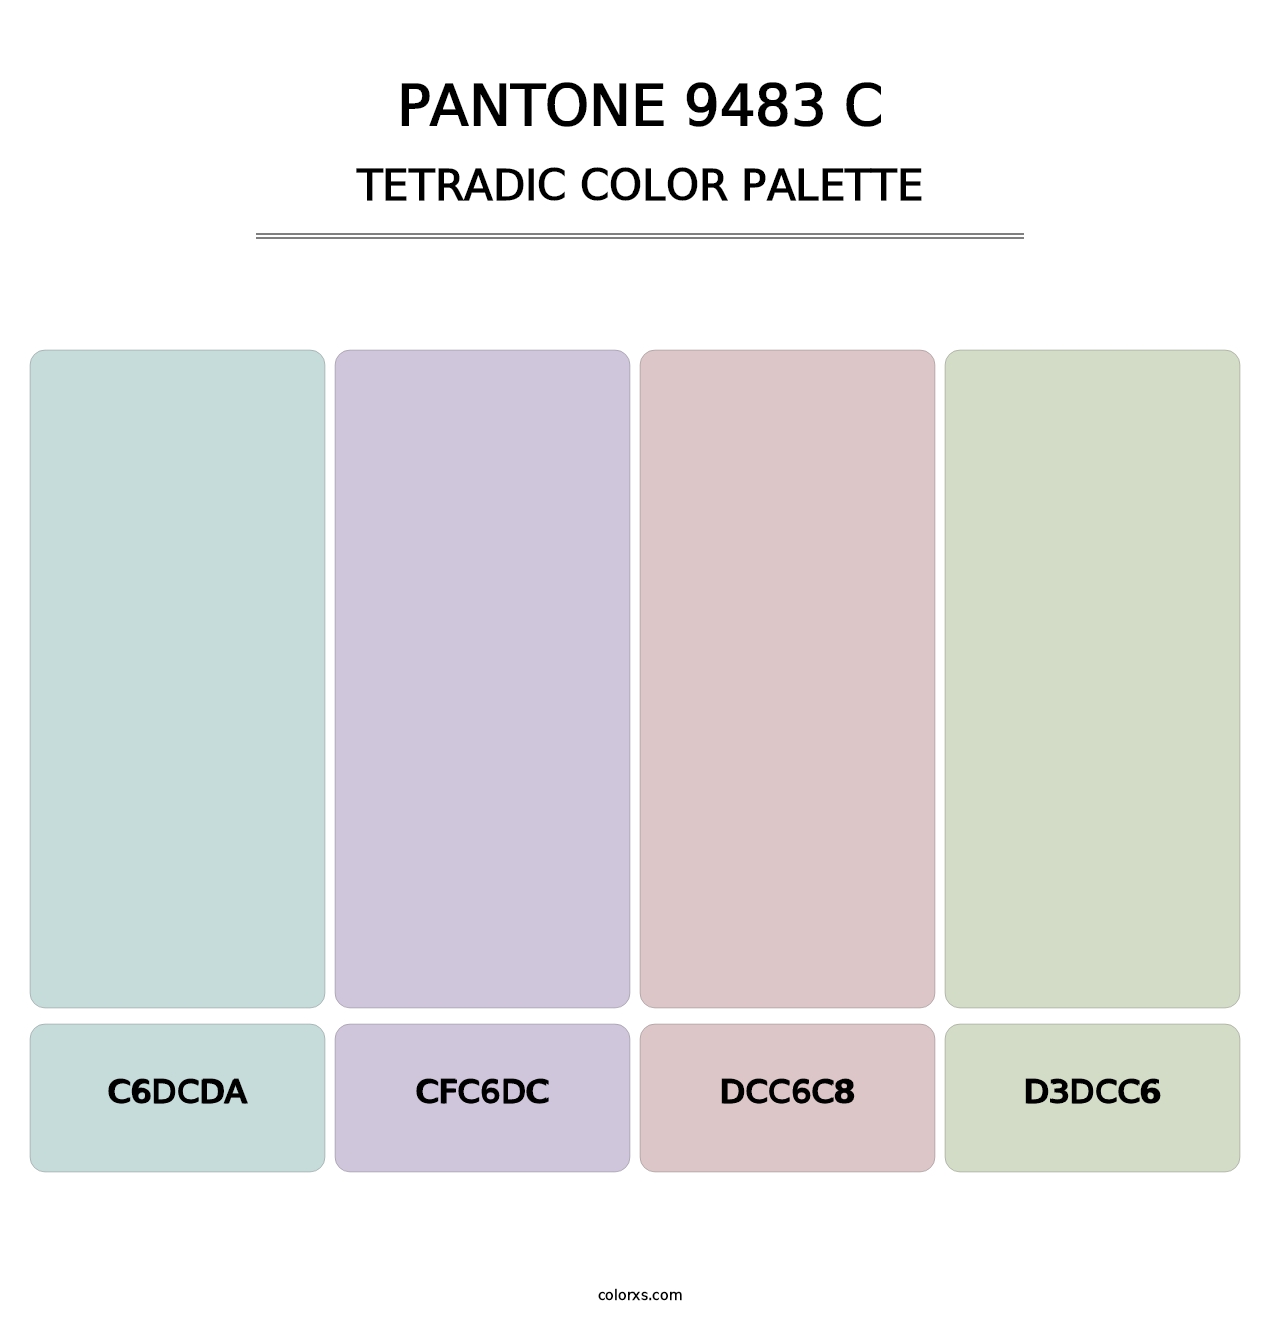 PANTONE 9483 C - Tetradic Color Palette